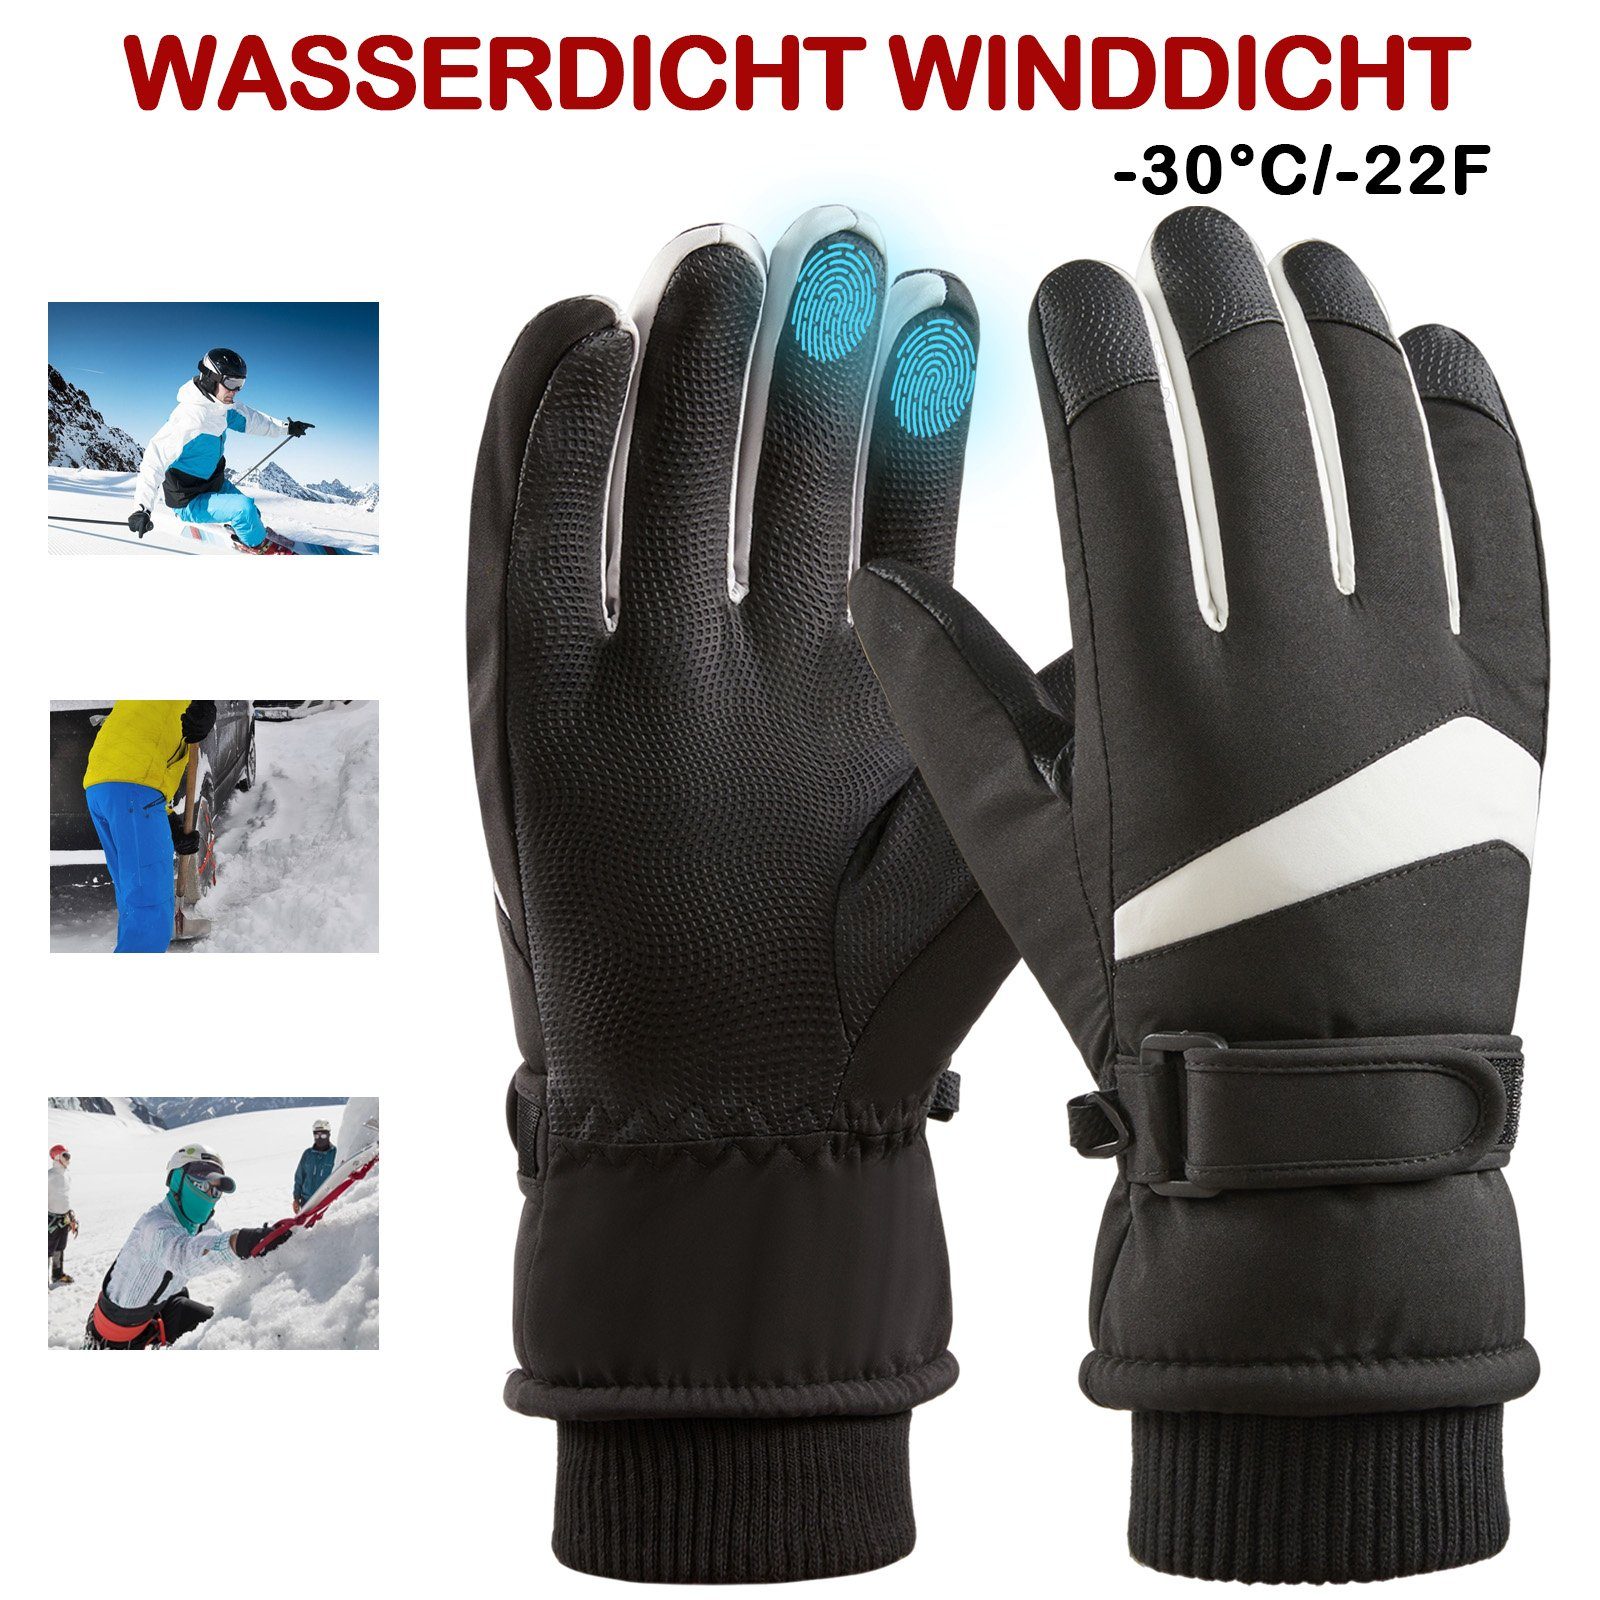 Radfahren Sport Paar) Grau-Rosa Warm, Outdoor Skifahren Touchscreen, Winter Wandern (1 wasserdicht, Männer rutschfest, für Skihandschuhe Frauen Rosnek